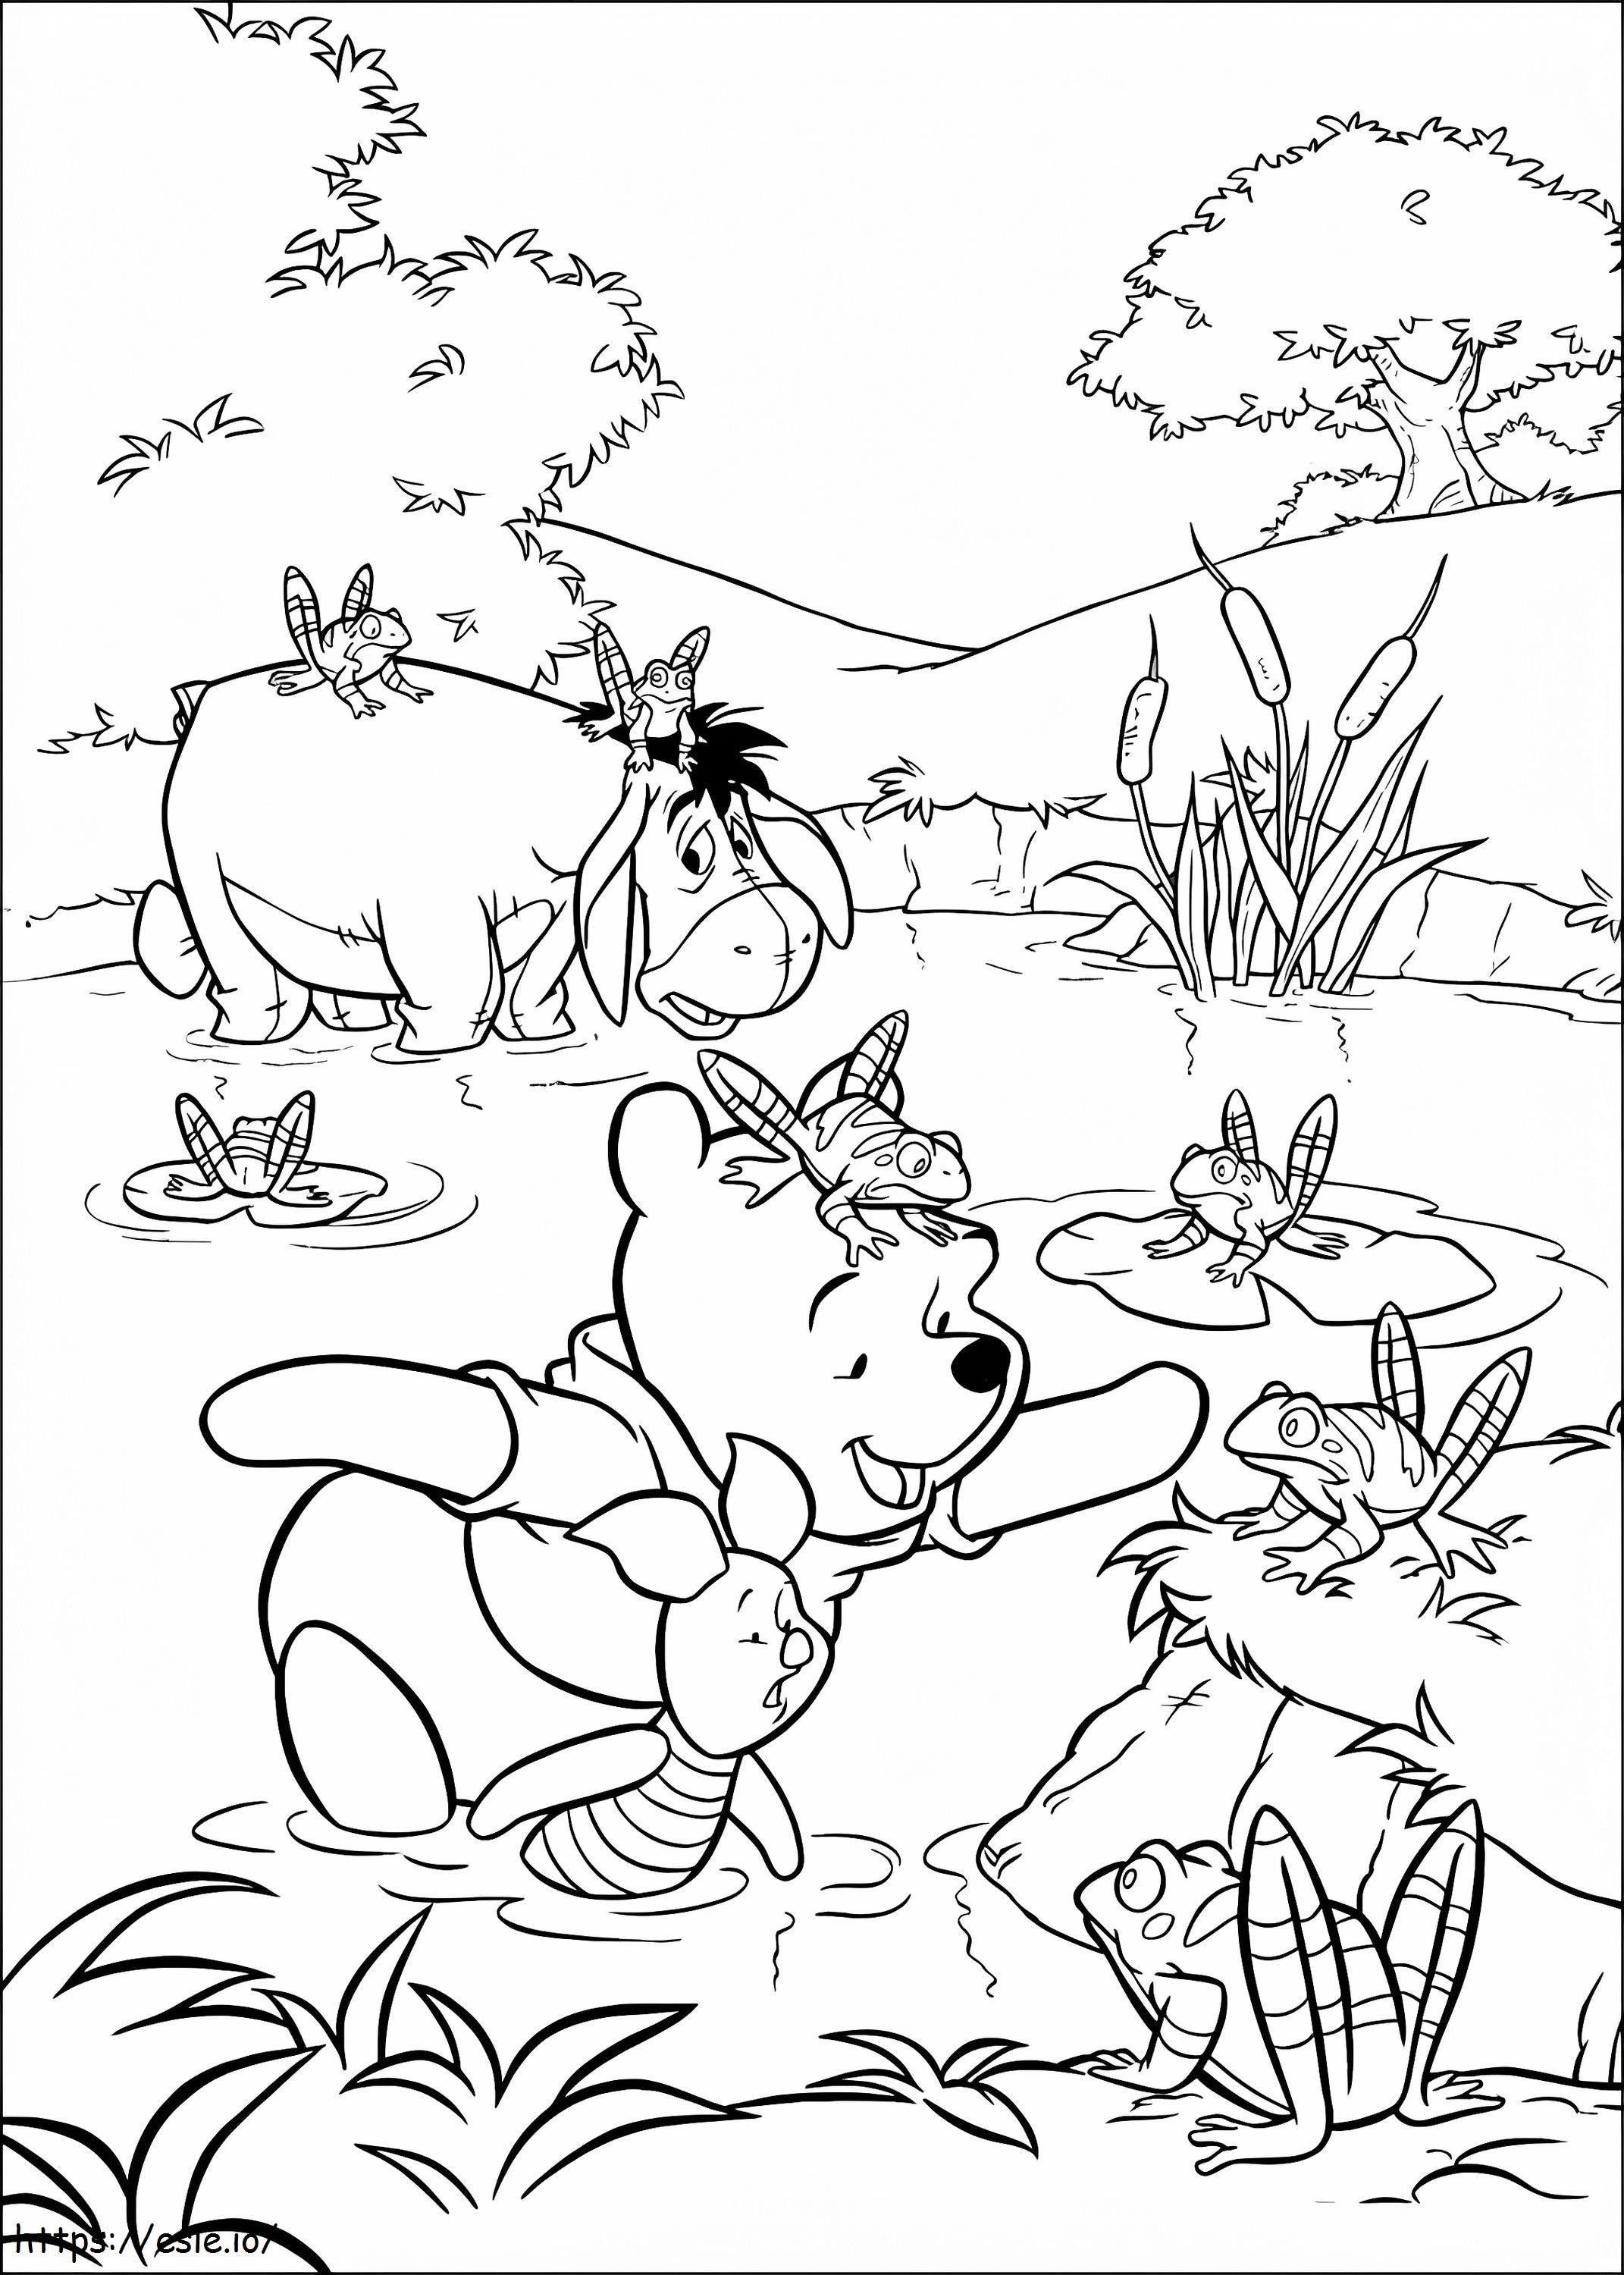 Winnie Sederhana Dari Pooh And Friends Gambar Mewarnai